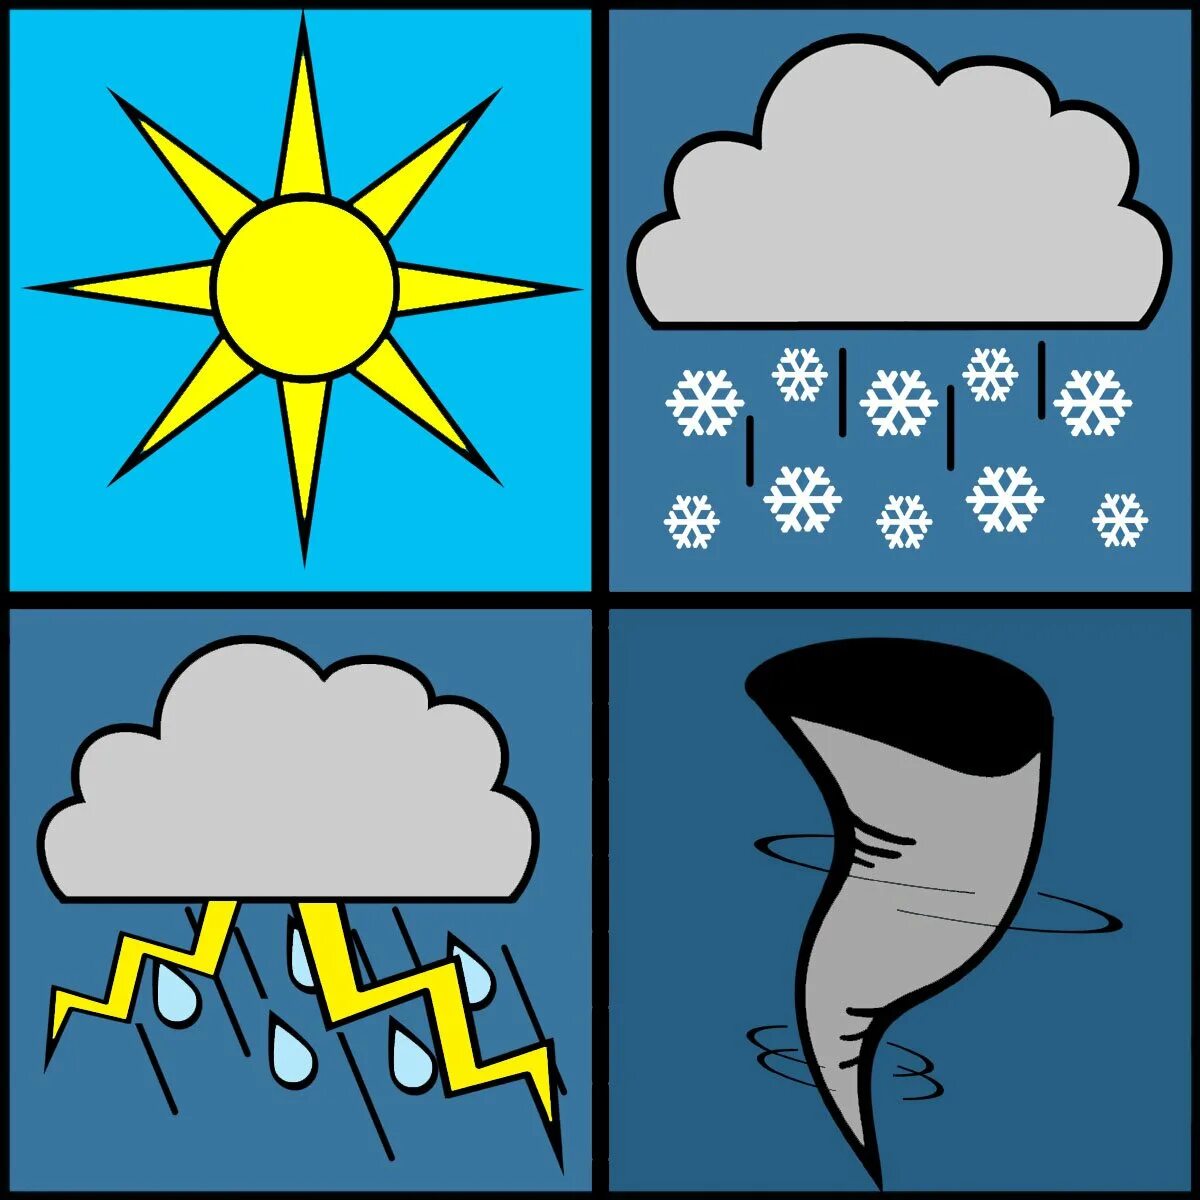 Birds children weather. Погода рисунок. Погода картинки для детей. Карточки weather для детей. Рисуем погоду.